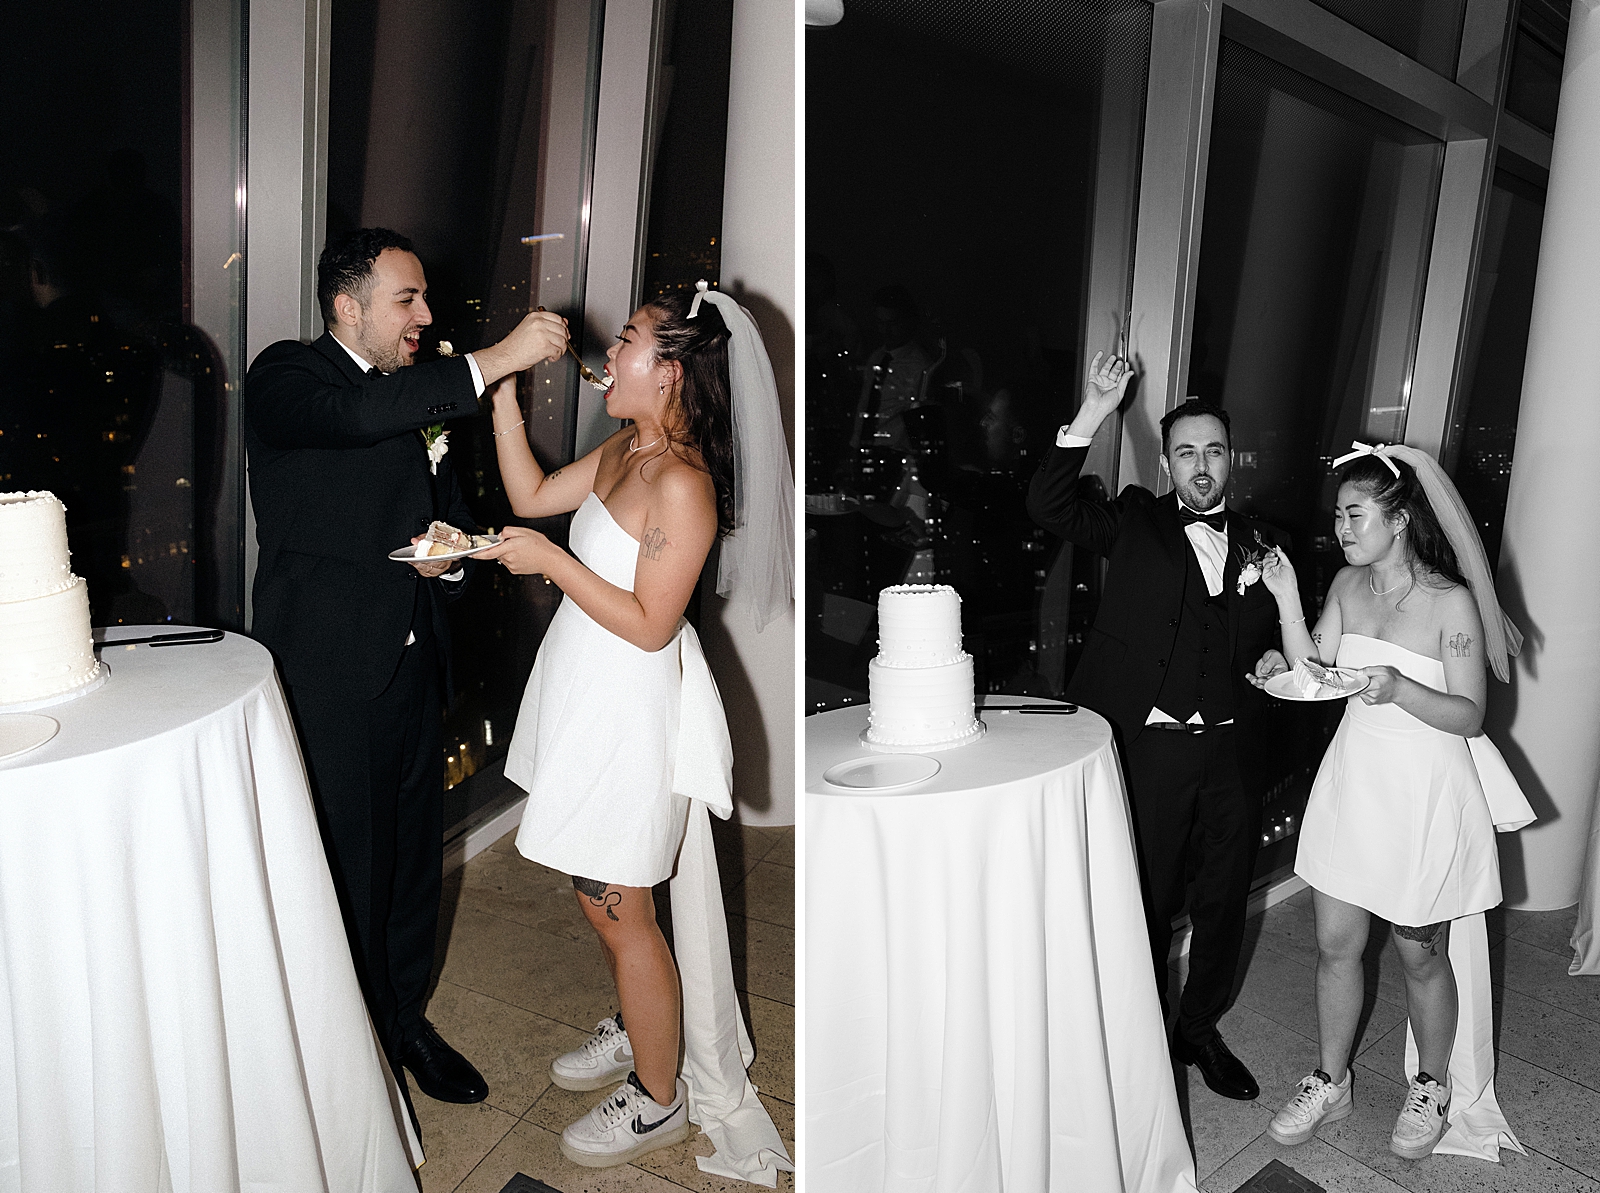 Left photo: Full shot of the bride and groom feeding each other wedding cake. 
Right photo: Full shot of the bride and groom looking excited about their wedding cake. 